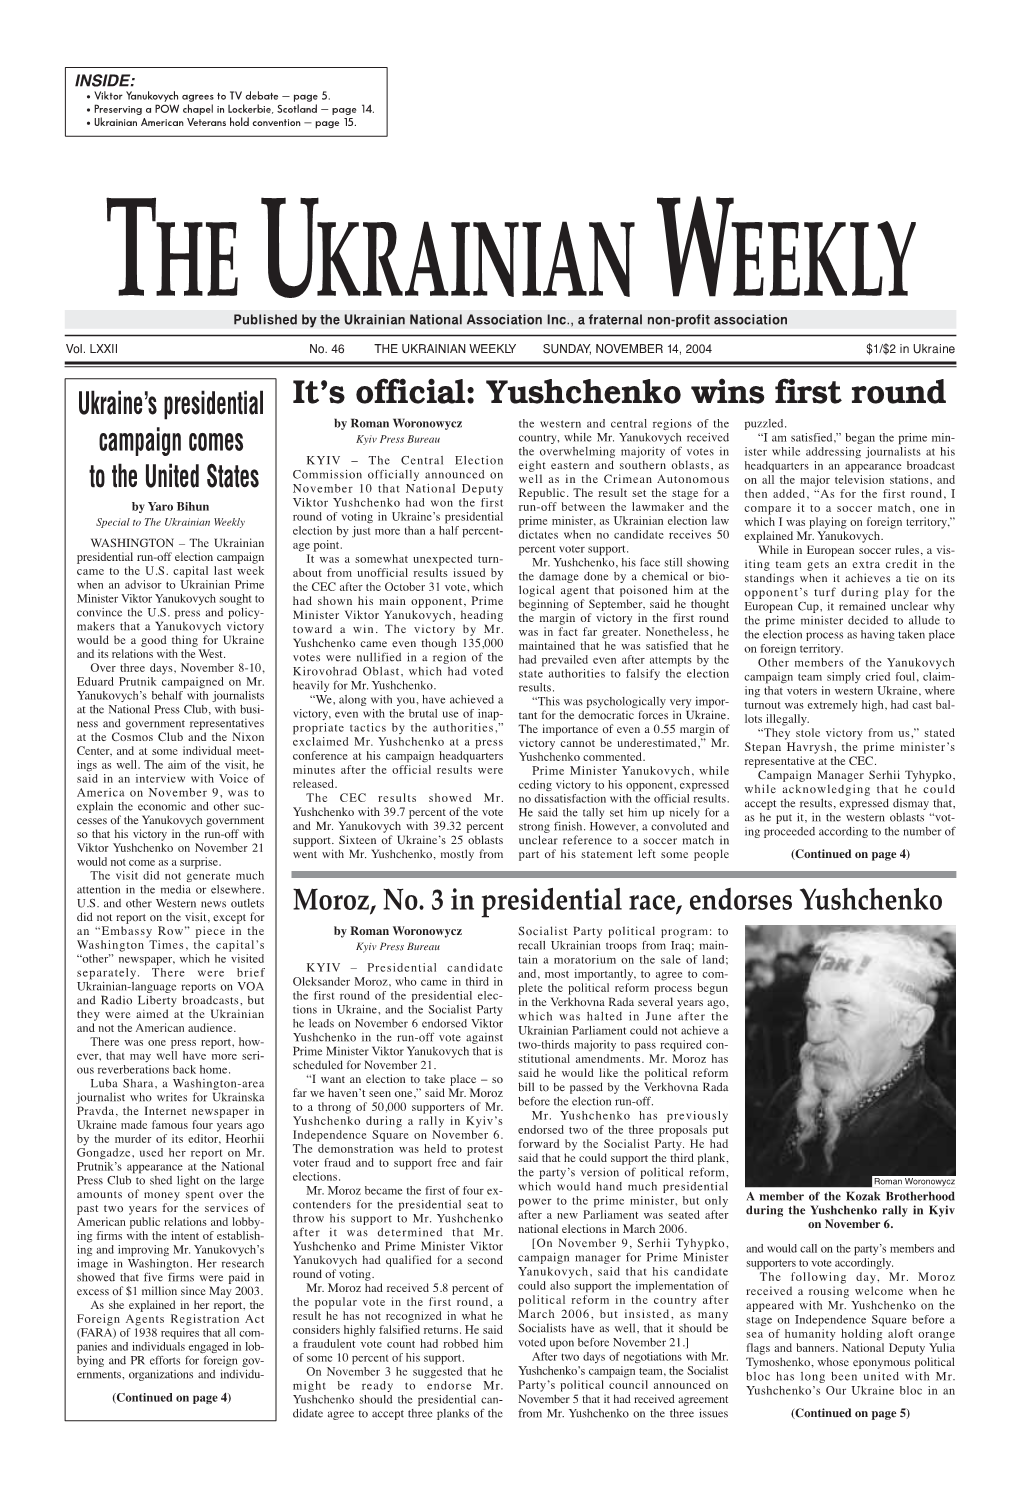 The Ukrainian Weekly 2004, No.46